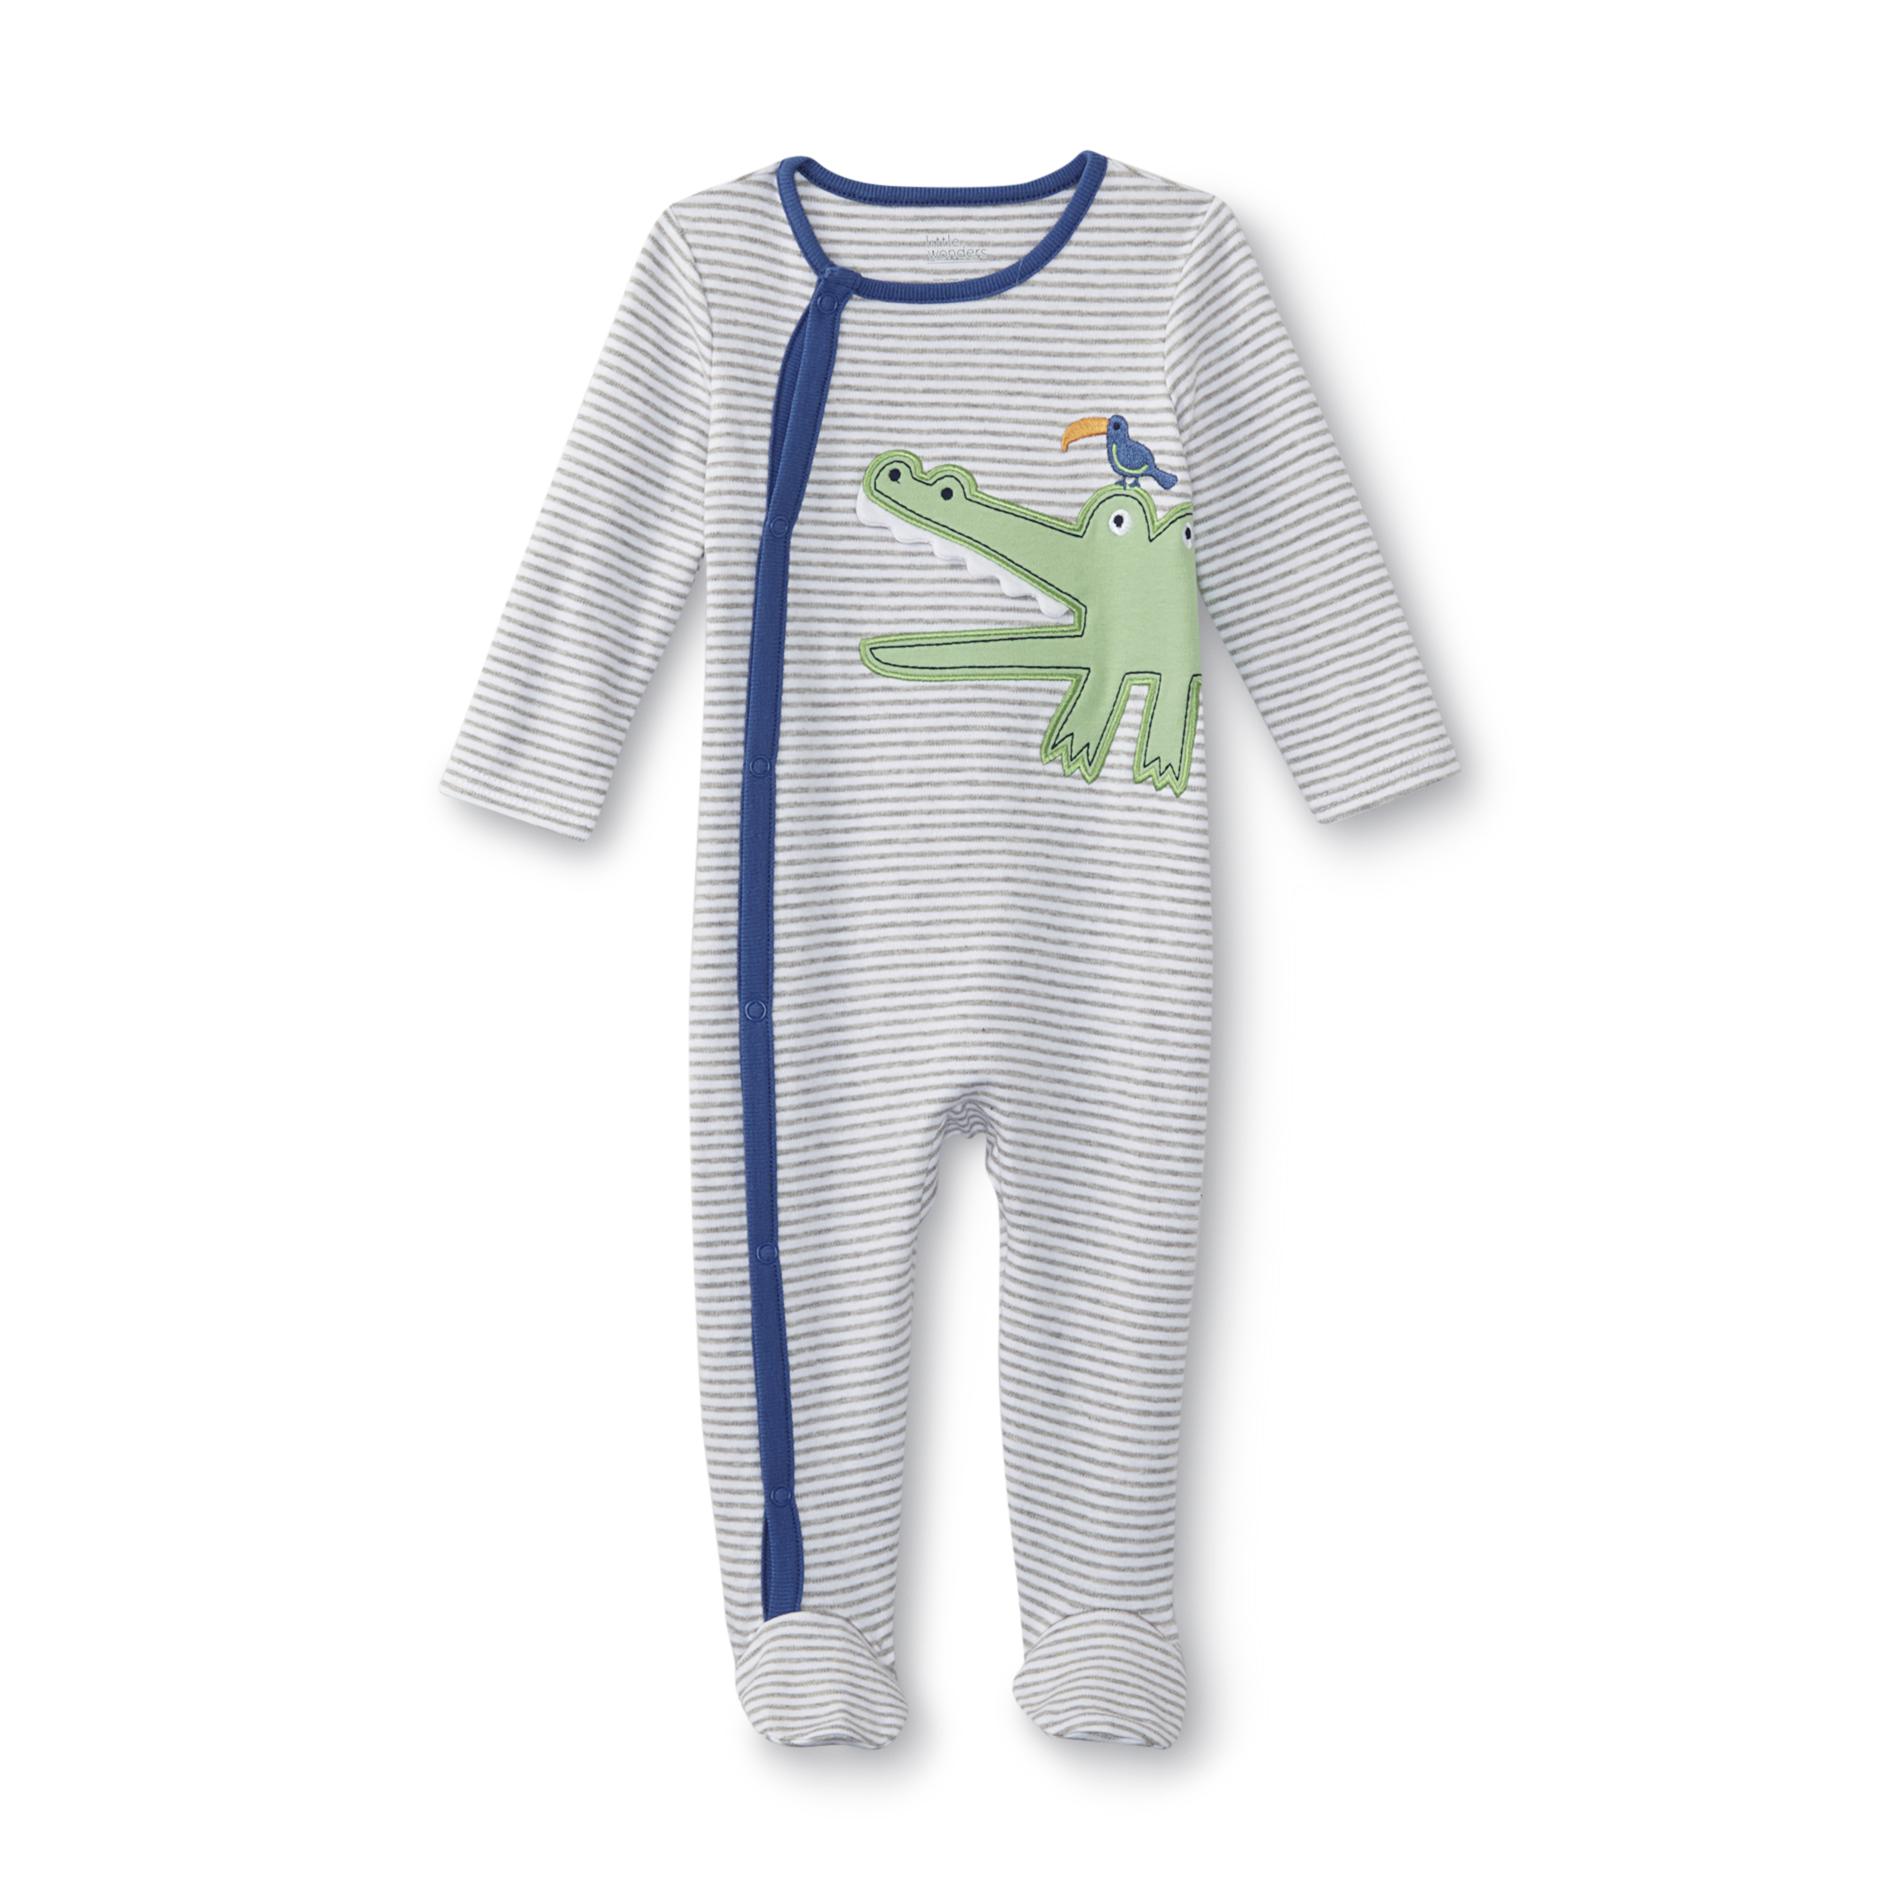 Little Wonders Newborn Boy's Sleeper Pajamas - Alligator